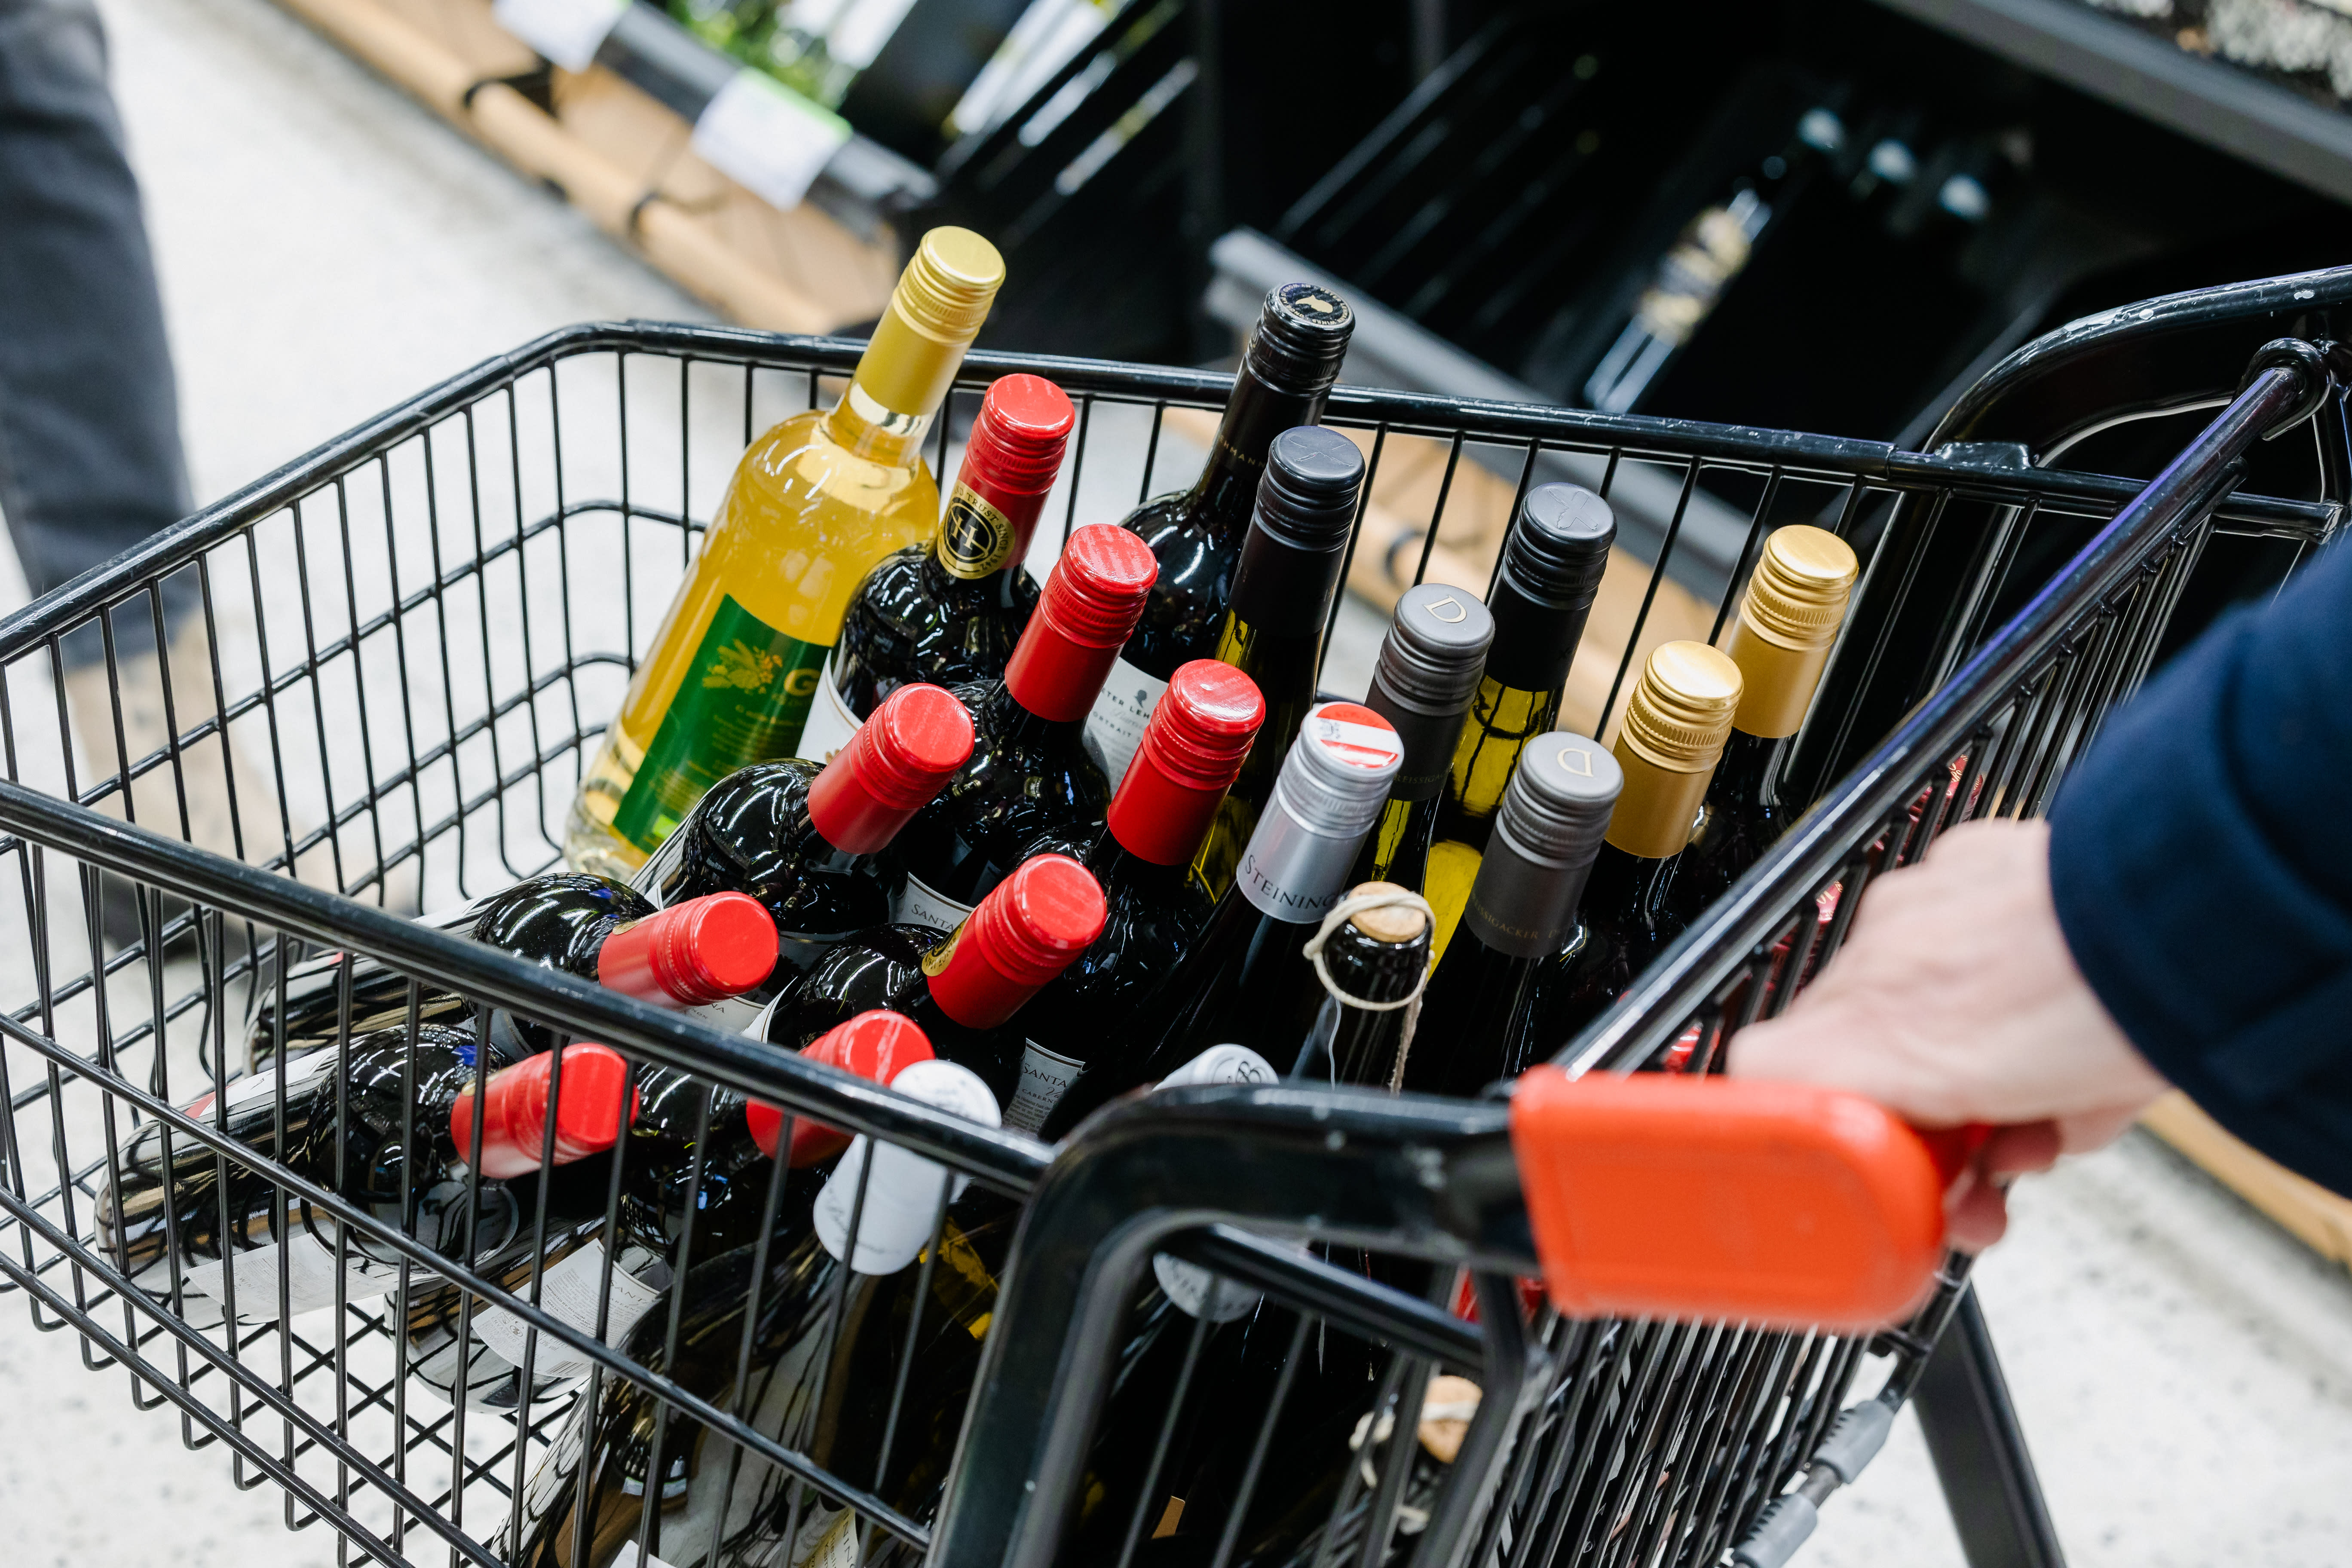 Finnen bestellen weniger Alkohol aus dem Ausland